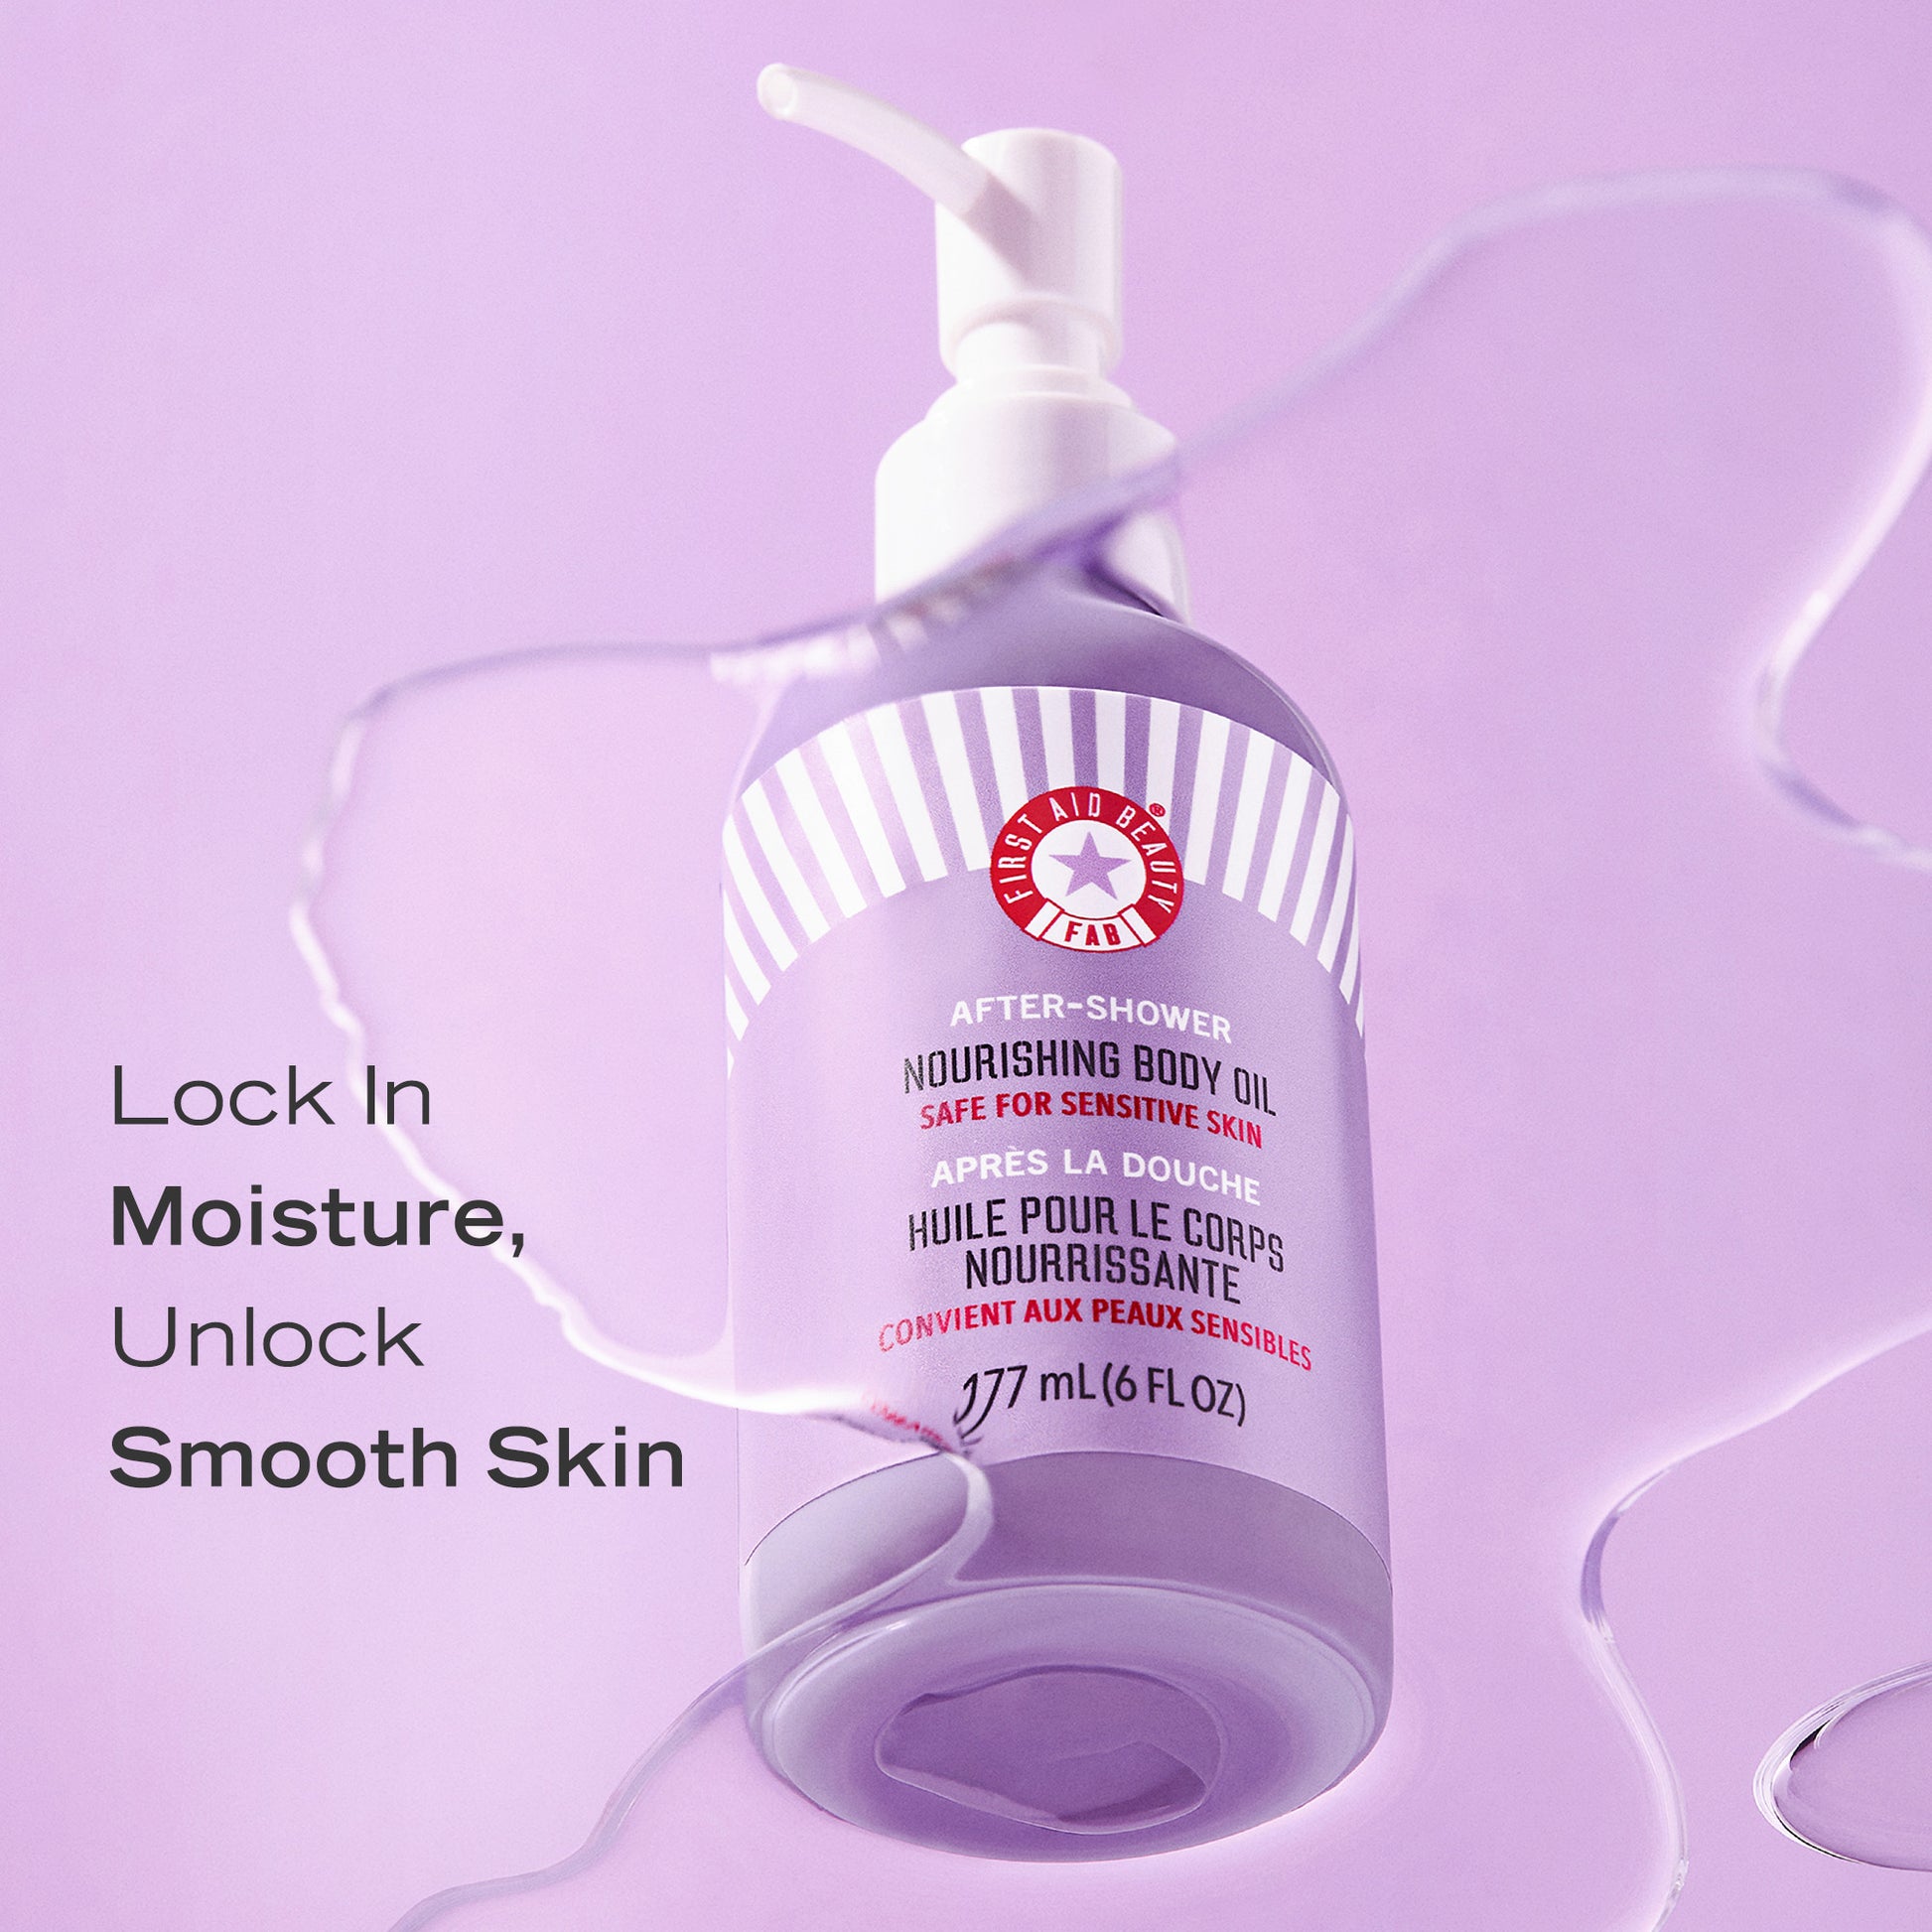 Consistency of After-Shower Nourishing Body Oil.  Lock in Moisture, Unlock Smooth Skin.